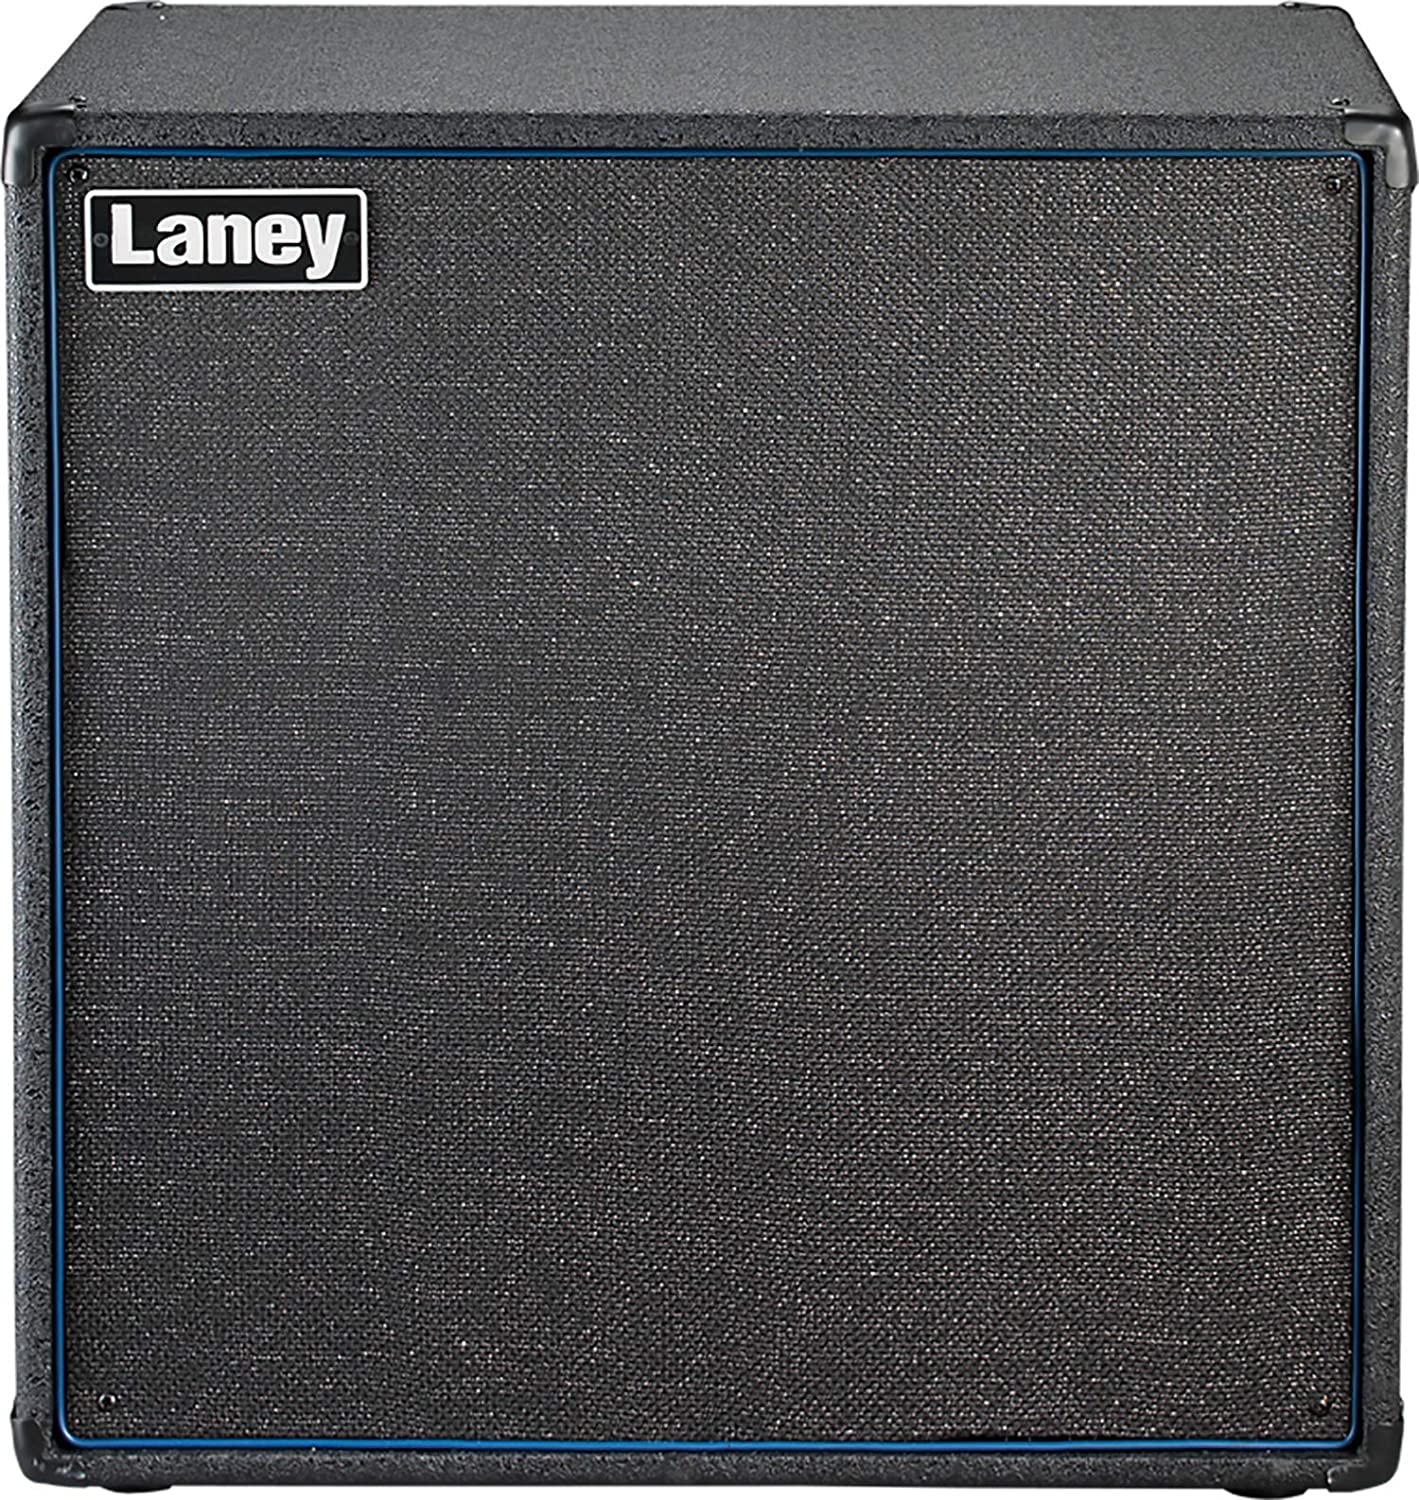 Laney Richter Series R410 - Bass Guitar Enclosure - 800watts 8ohm - 4x10inch Woofers Plus Horn